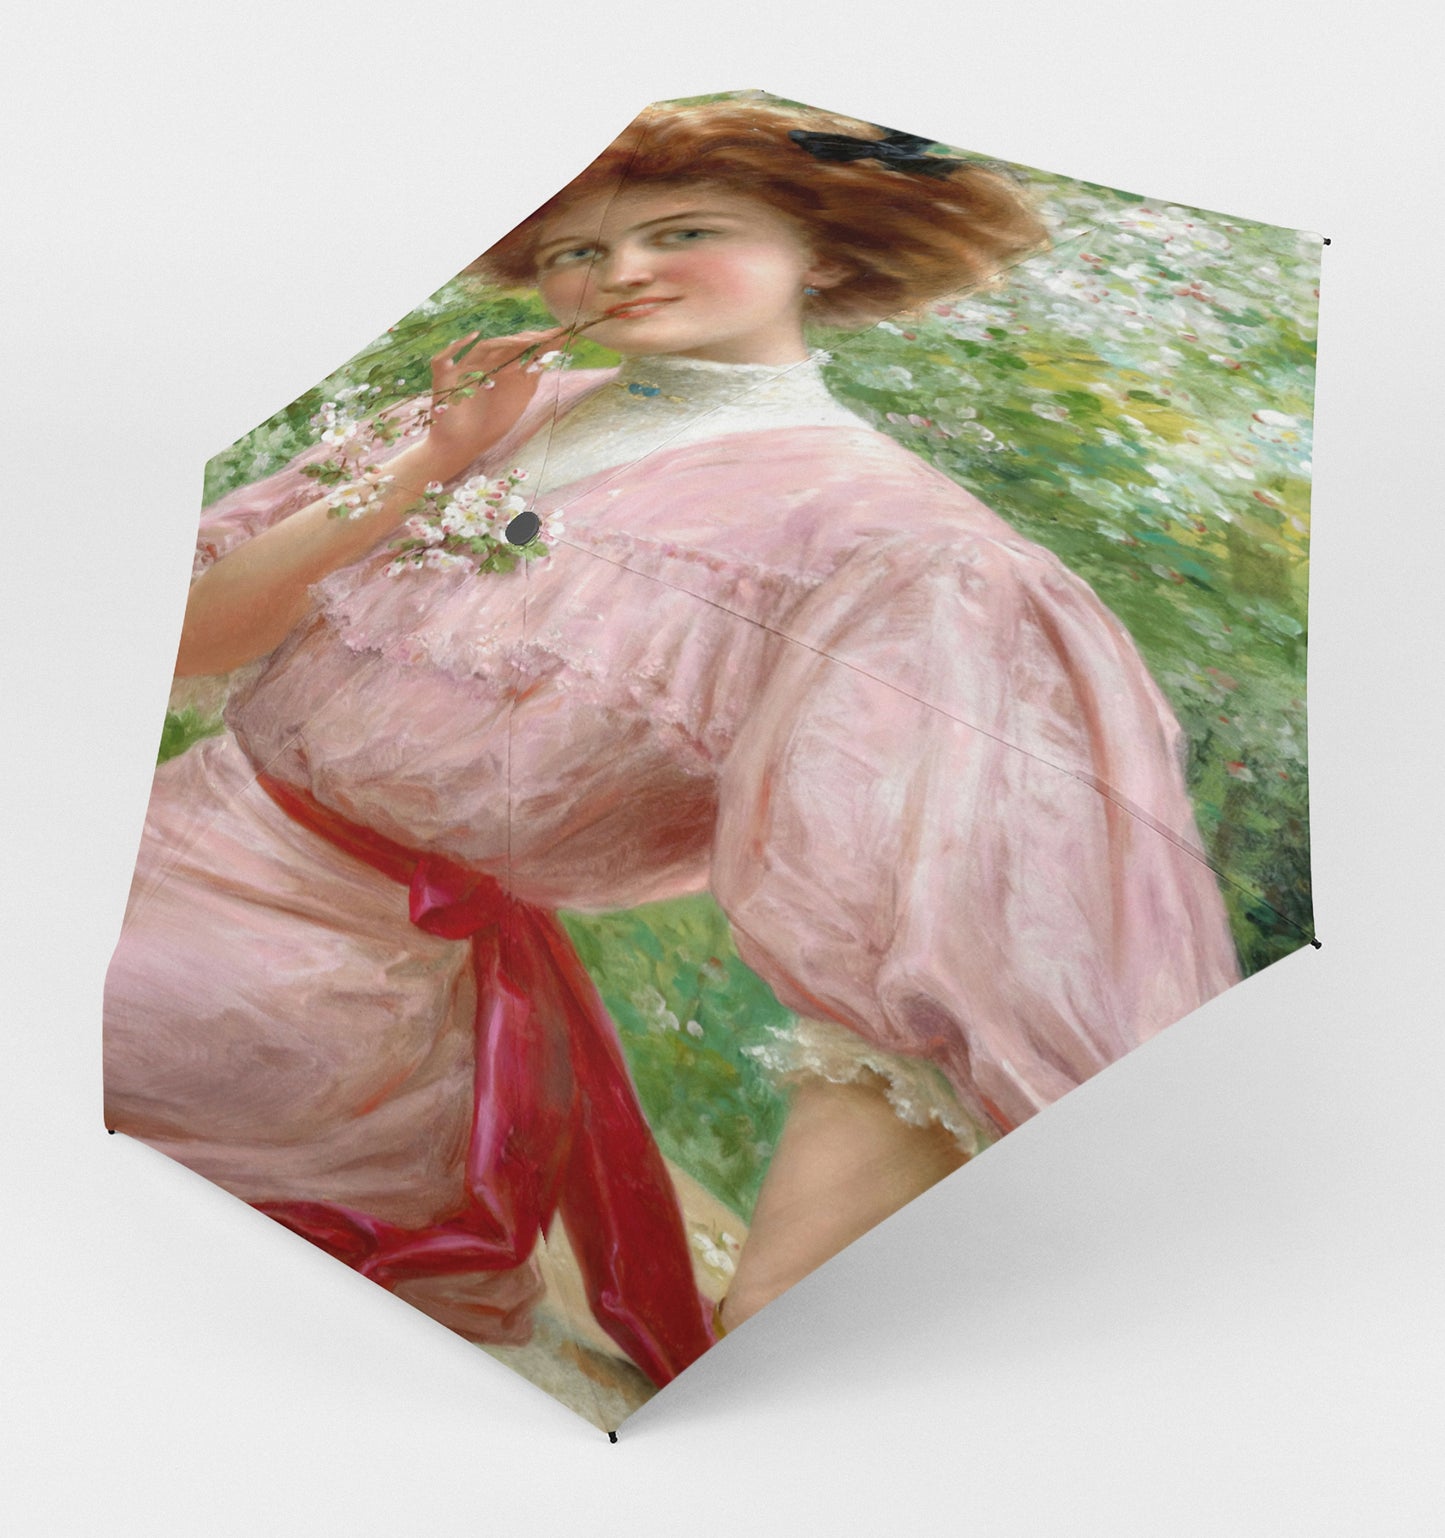 Victorian Lady Design UMBRELLA, Pretty In Pink Model U05-C20